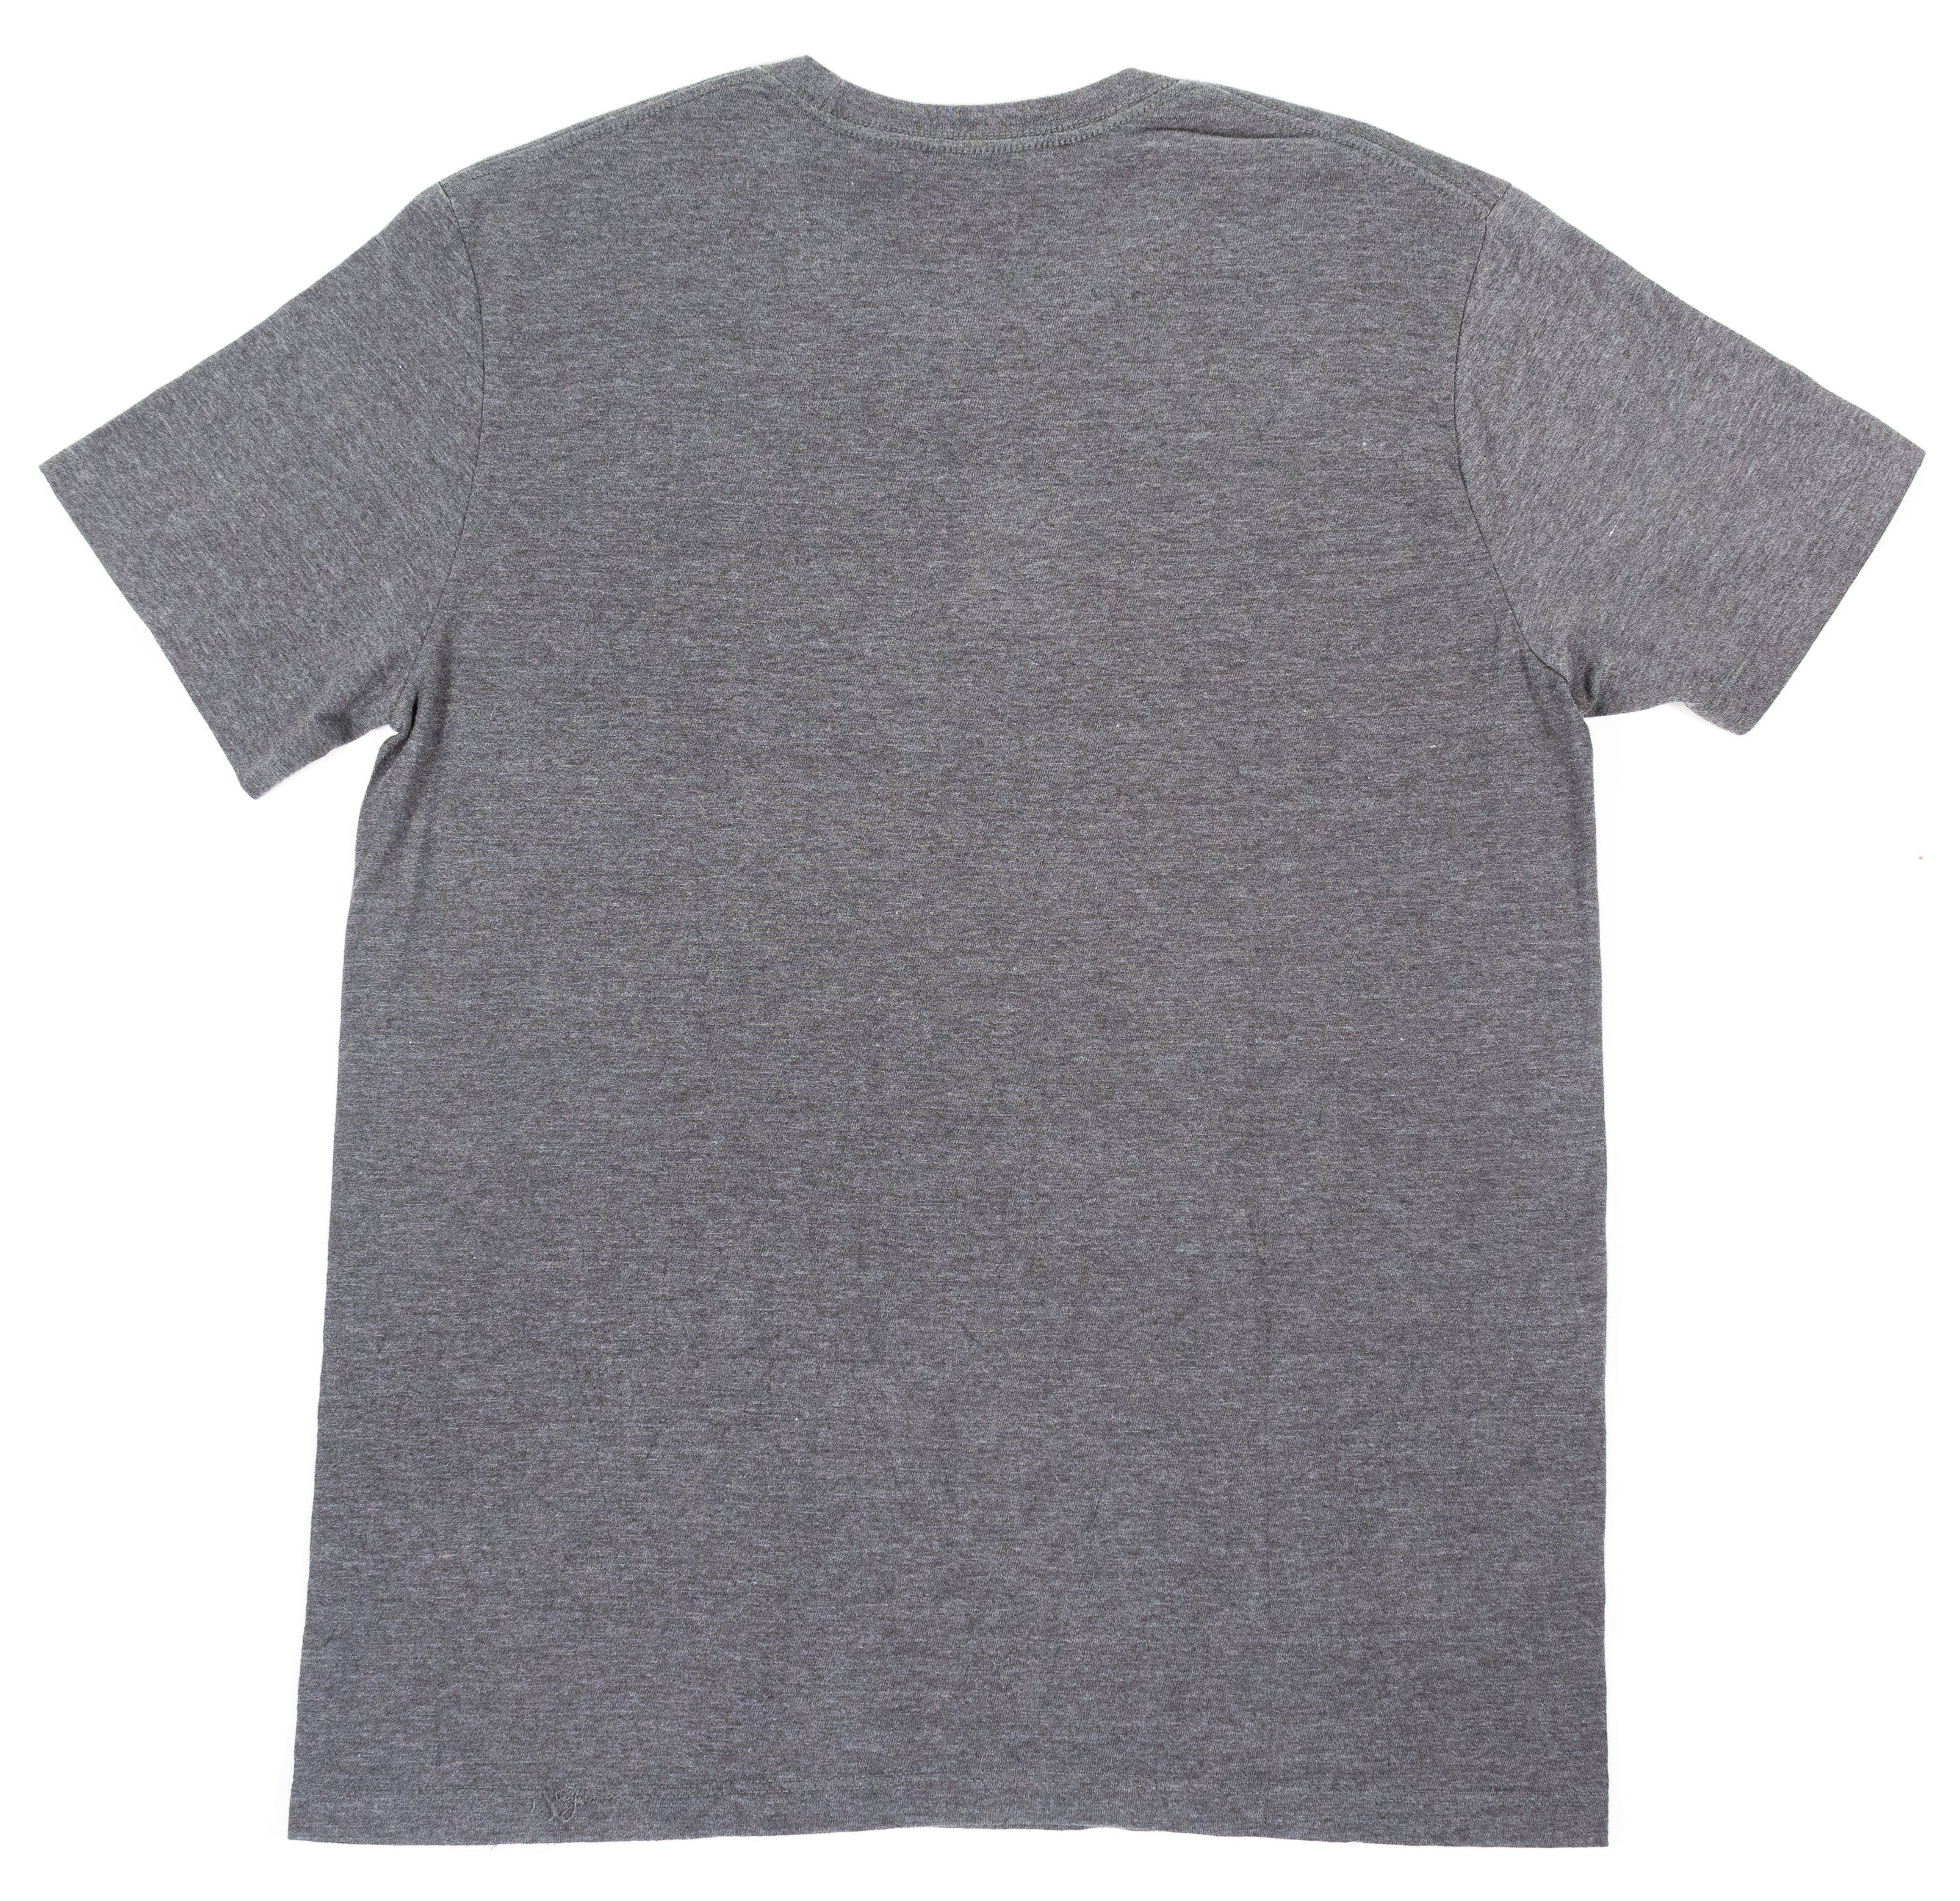 T-Shirt, Old Navy - (Talla: M) Gris/Batman